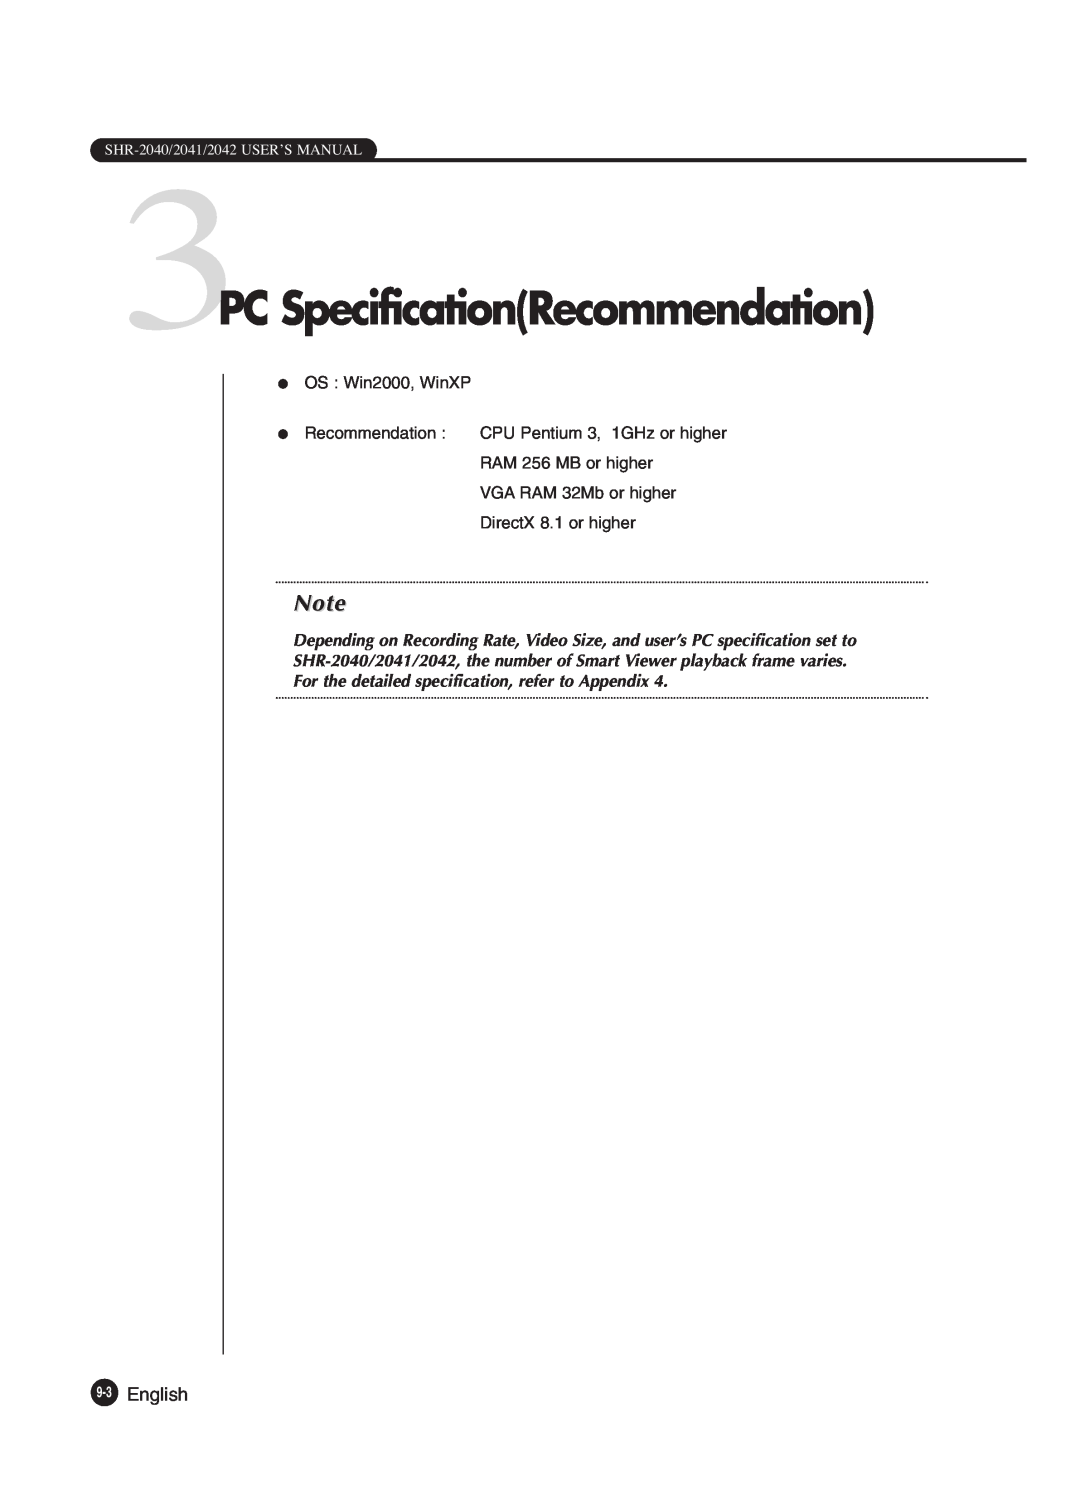 Samsung SHR-2042P250, SHR-2040P250 manual 3PC SpecificationRecommendation, English, SHR-2040/2041/2042 USER’S MANUAL 